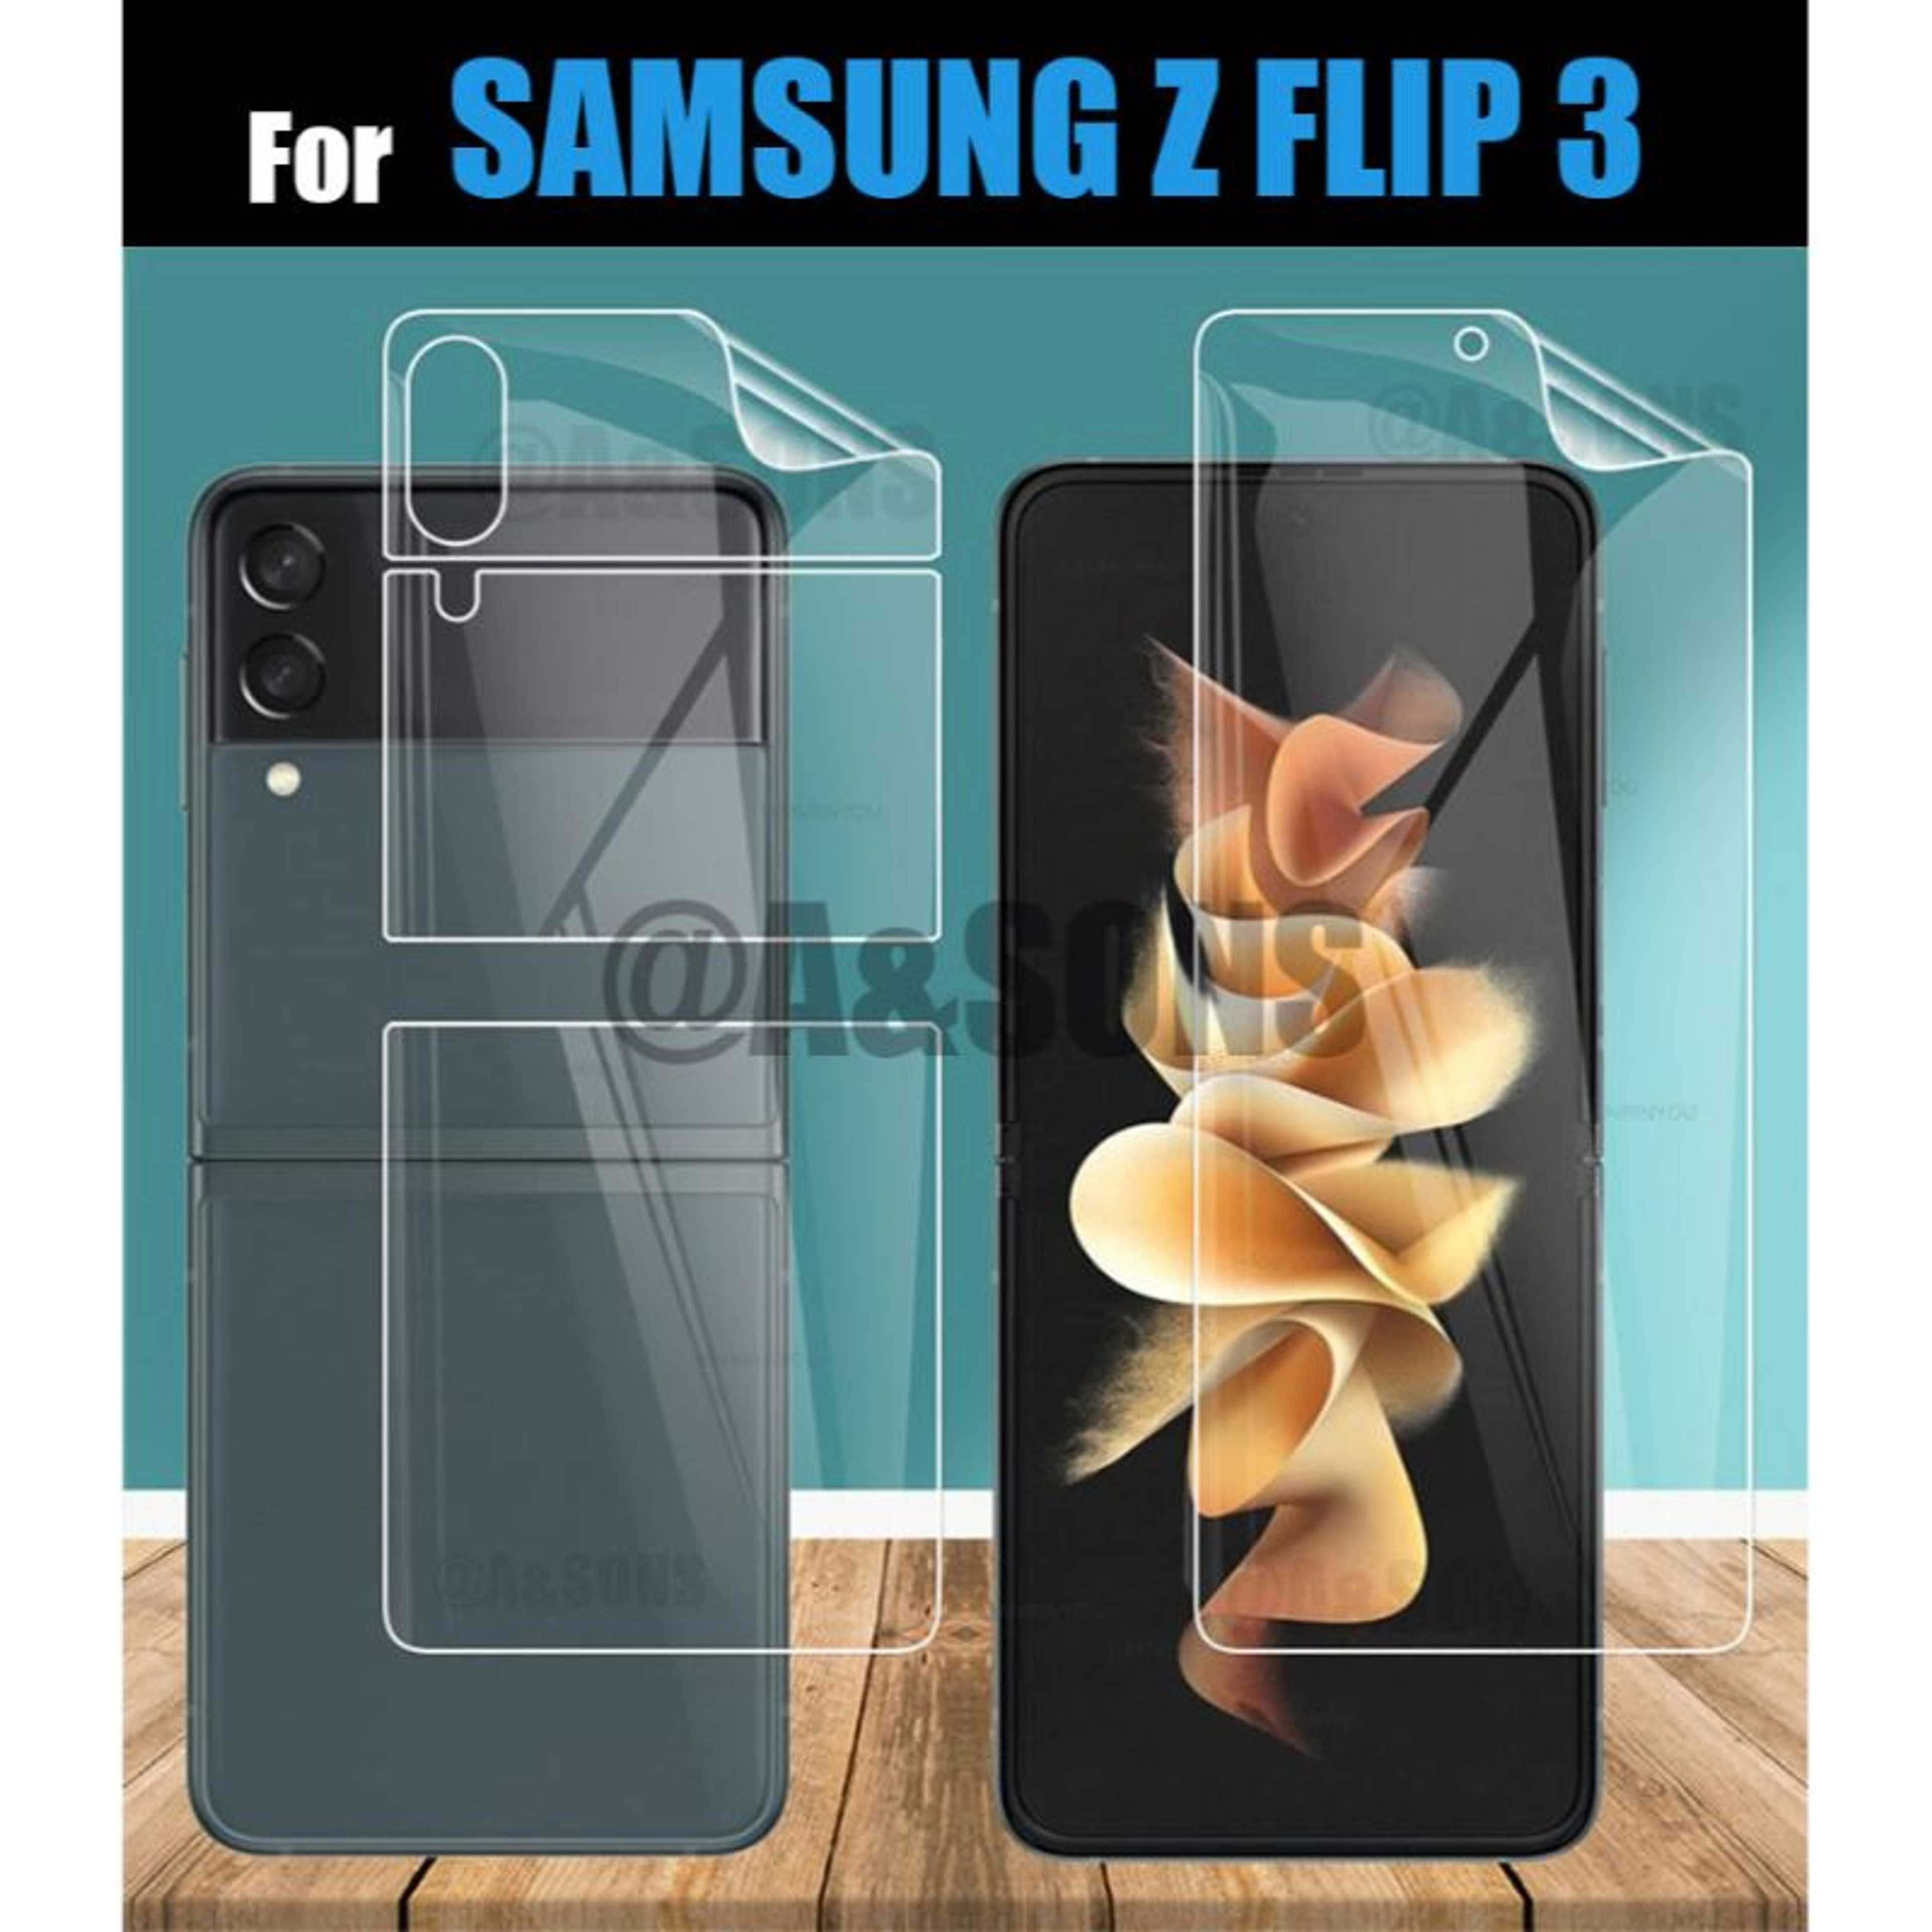 Samsung Z Flip 3 Front Screen Protector Back Side Protector And Inner Full Screen protector for Z Flip 3